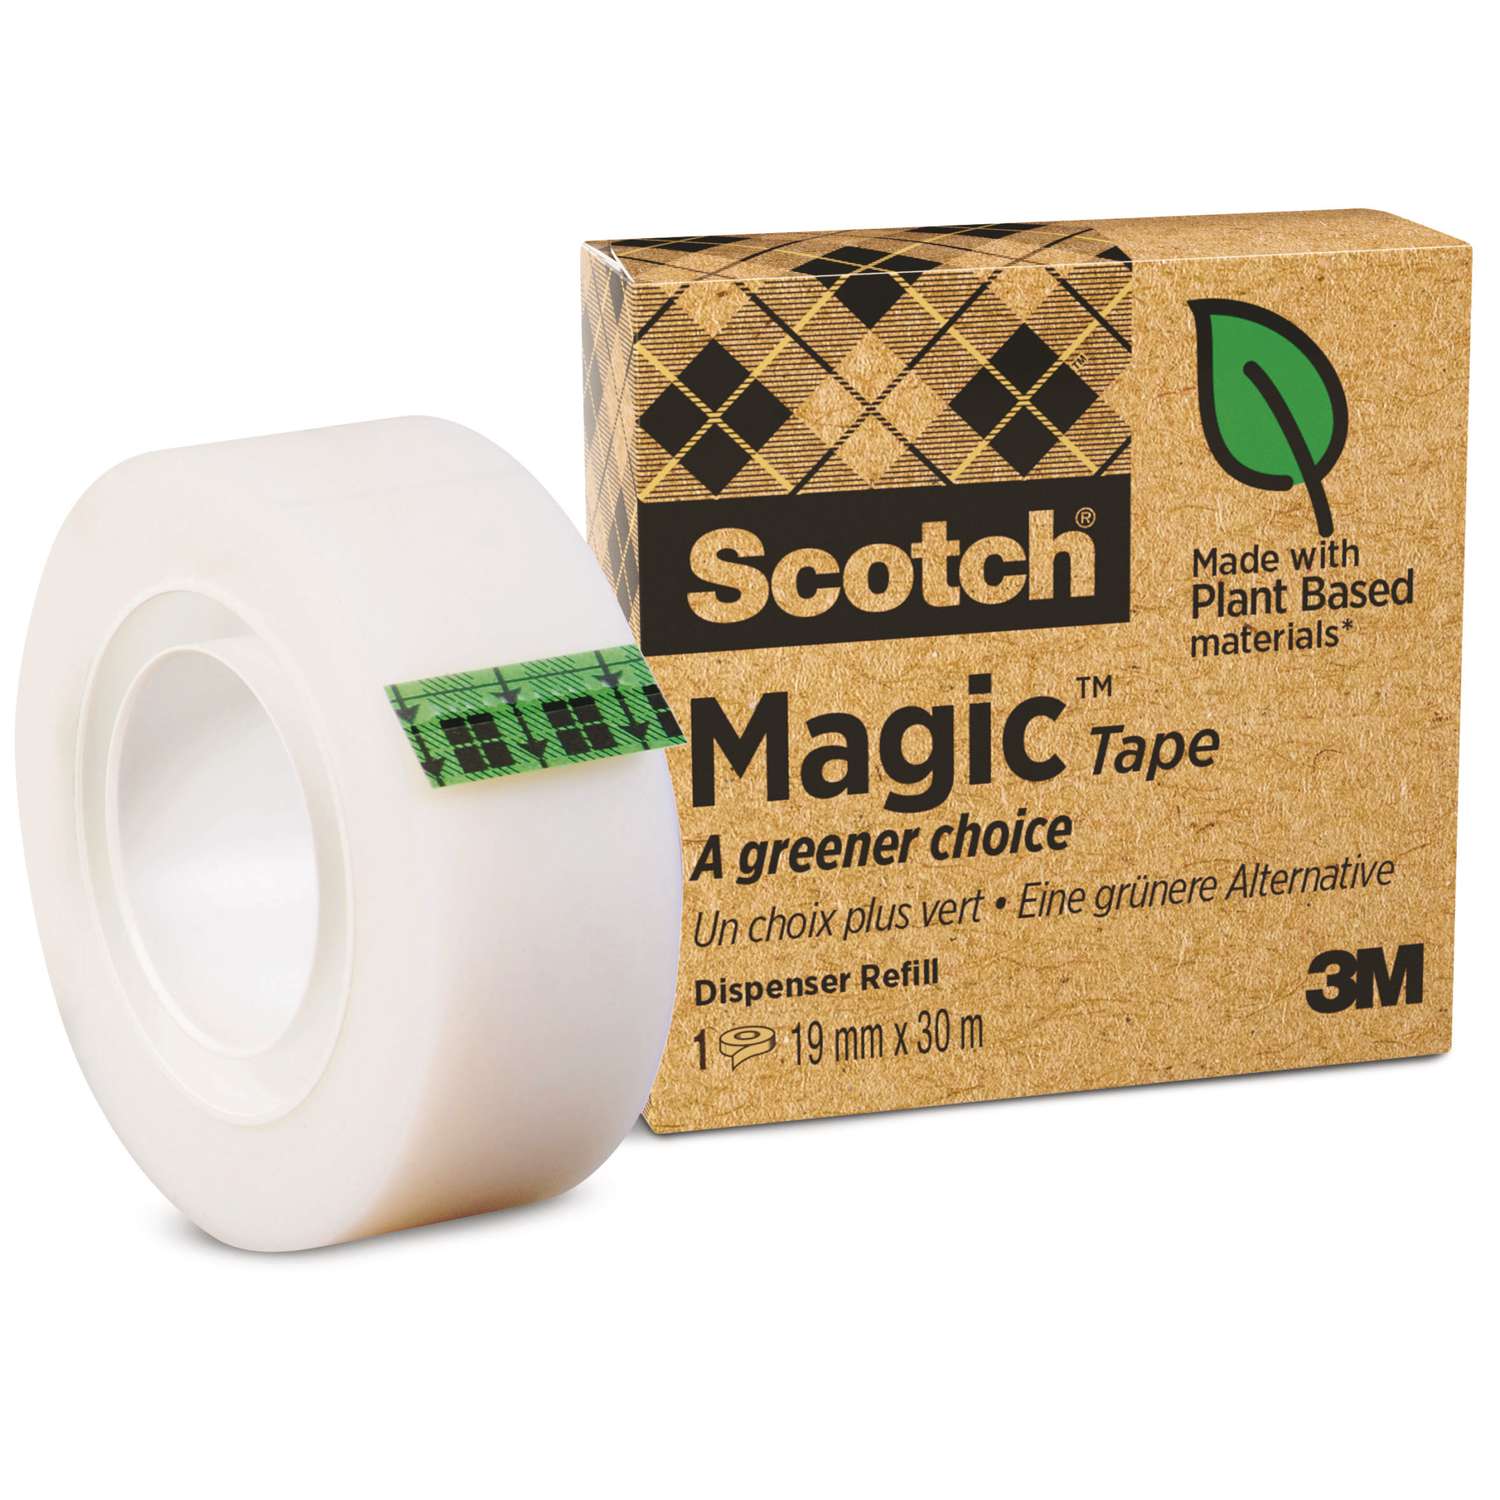 Scotch Double Sided Tape. Scotch Magic Tape poster.